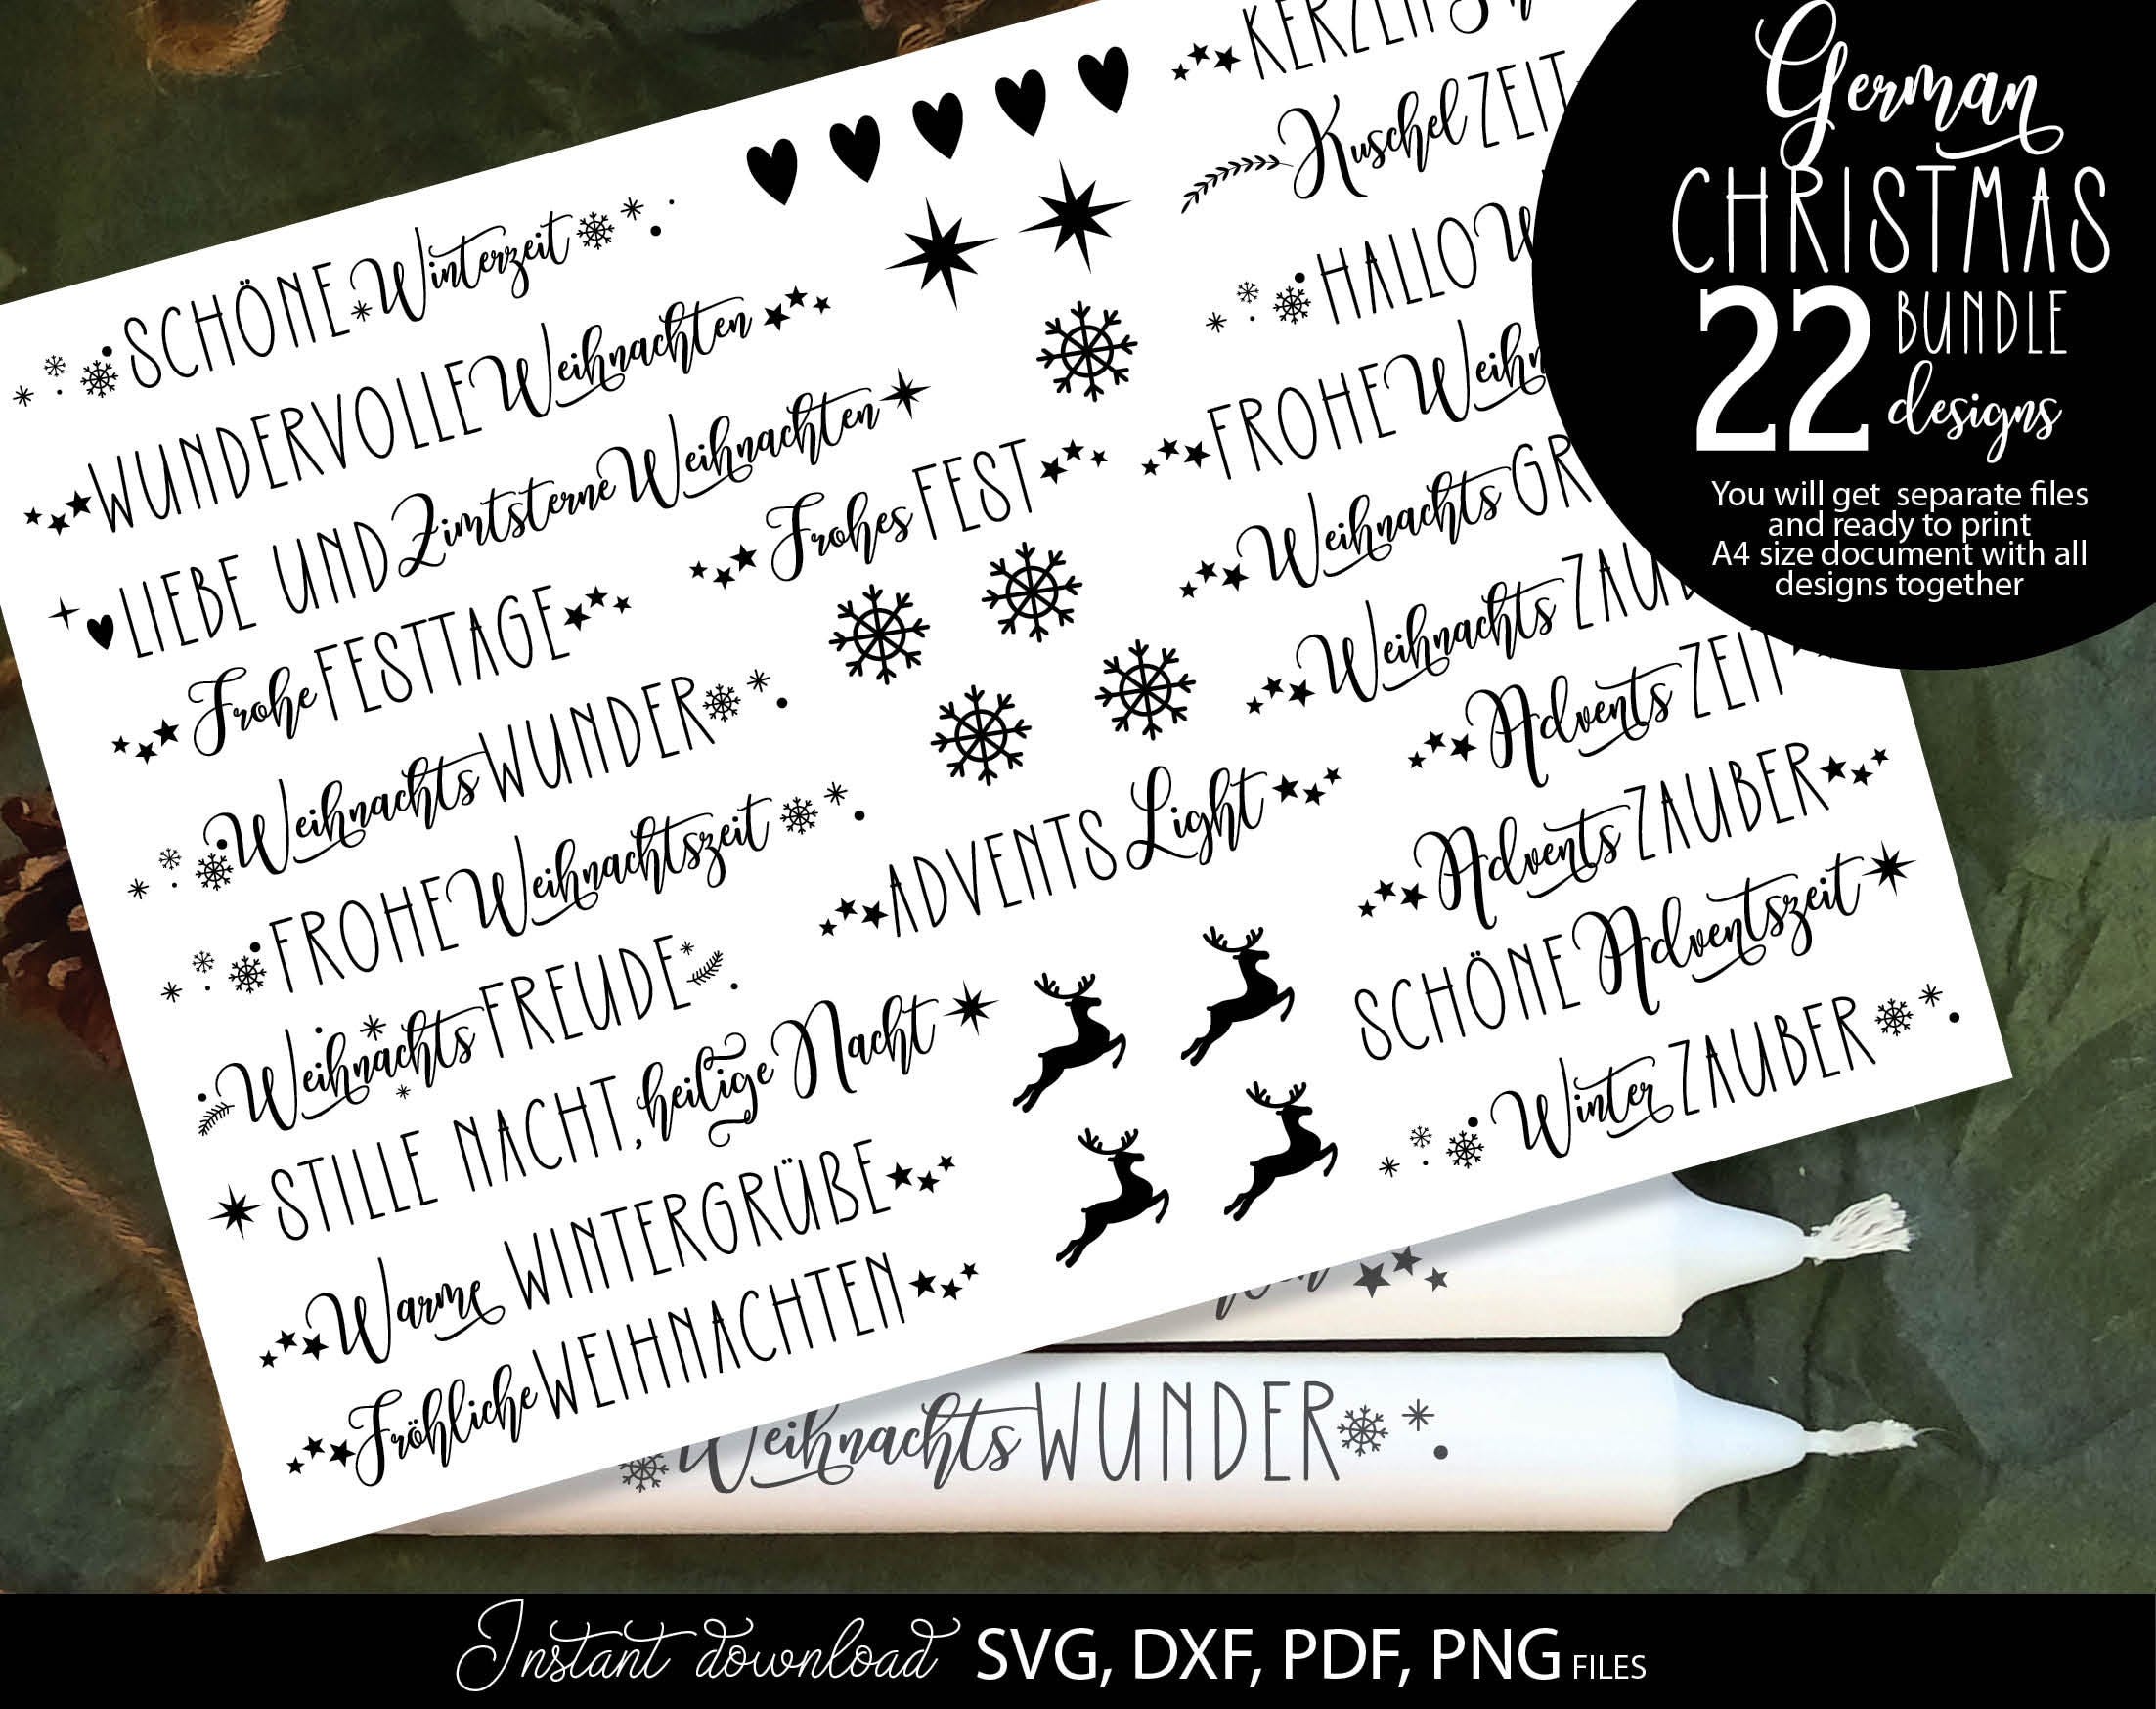 Bundle German Words Christmas SVG | Cut File German Lettering Christmas | Plotter File Candle Texts Christmas Candle Design SVG